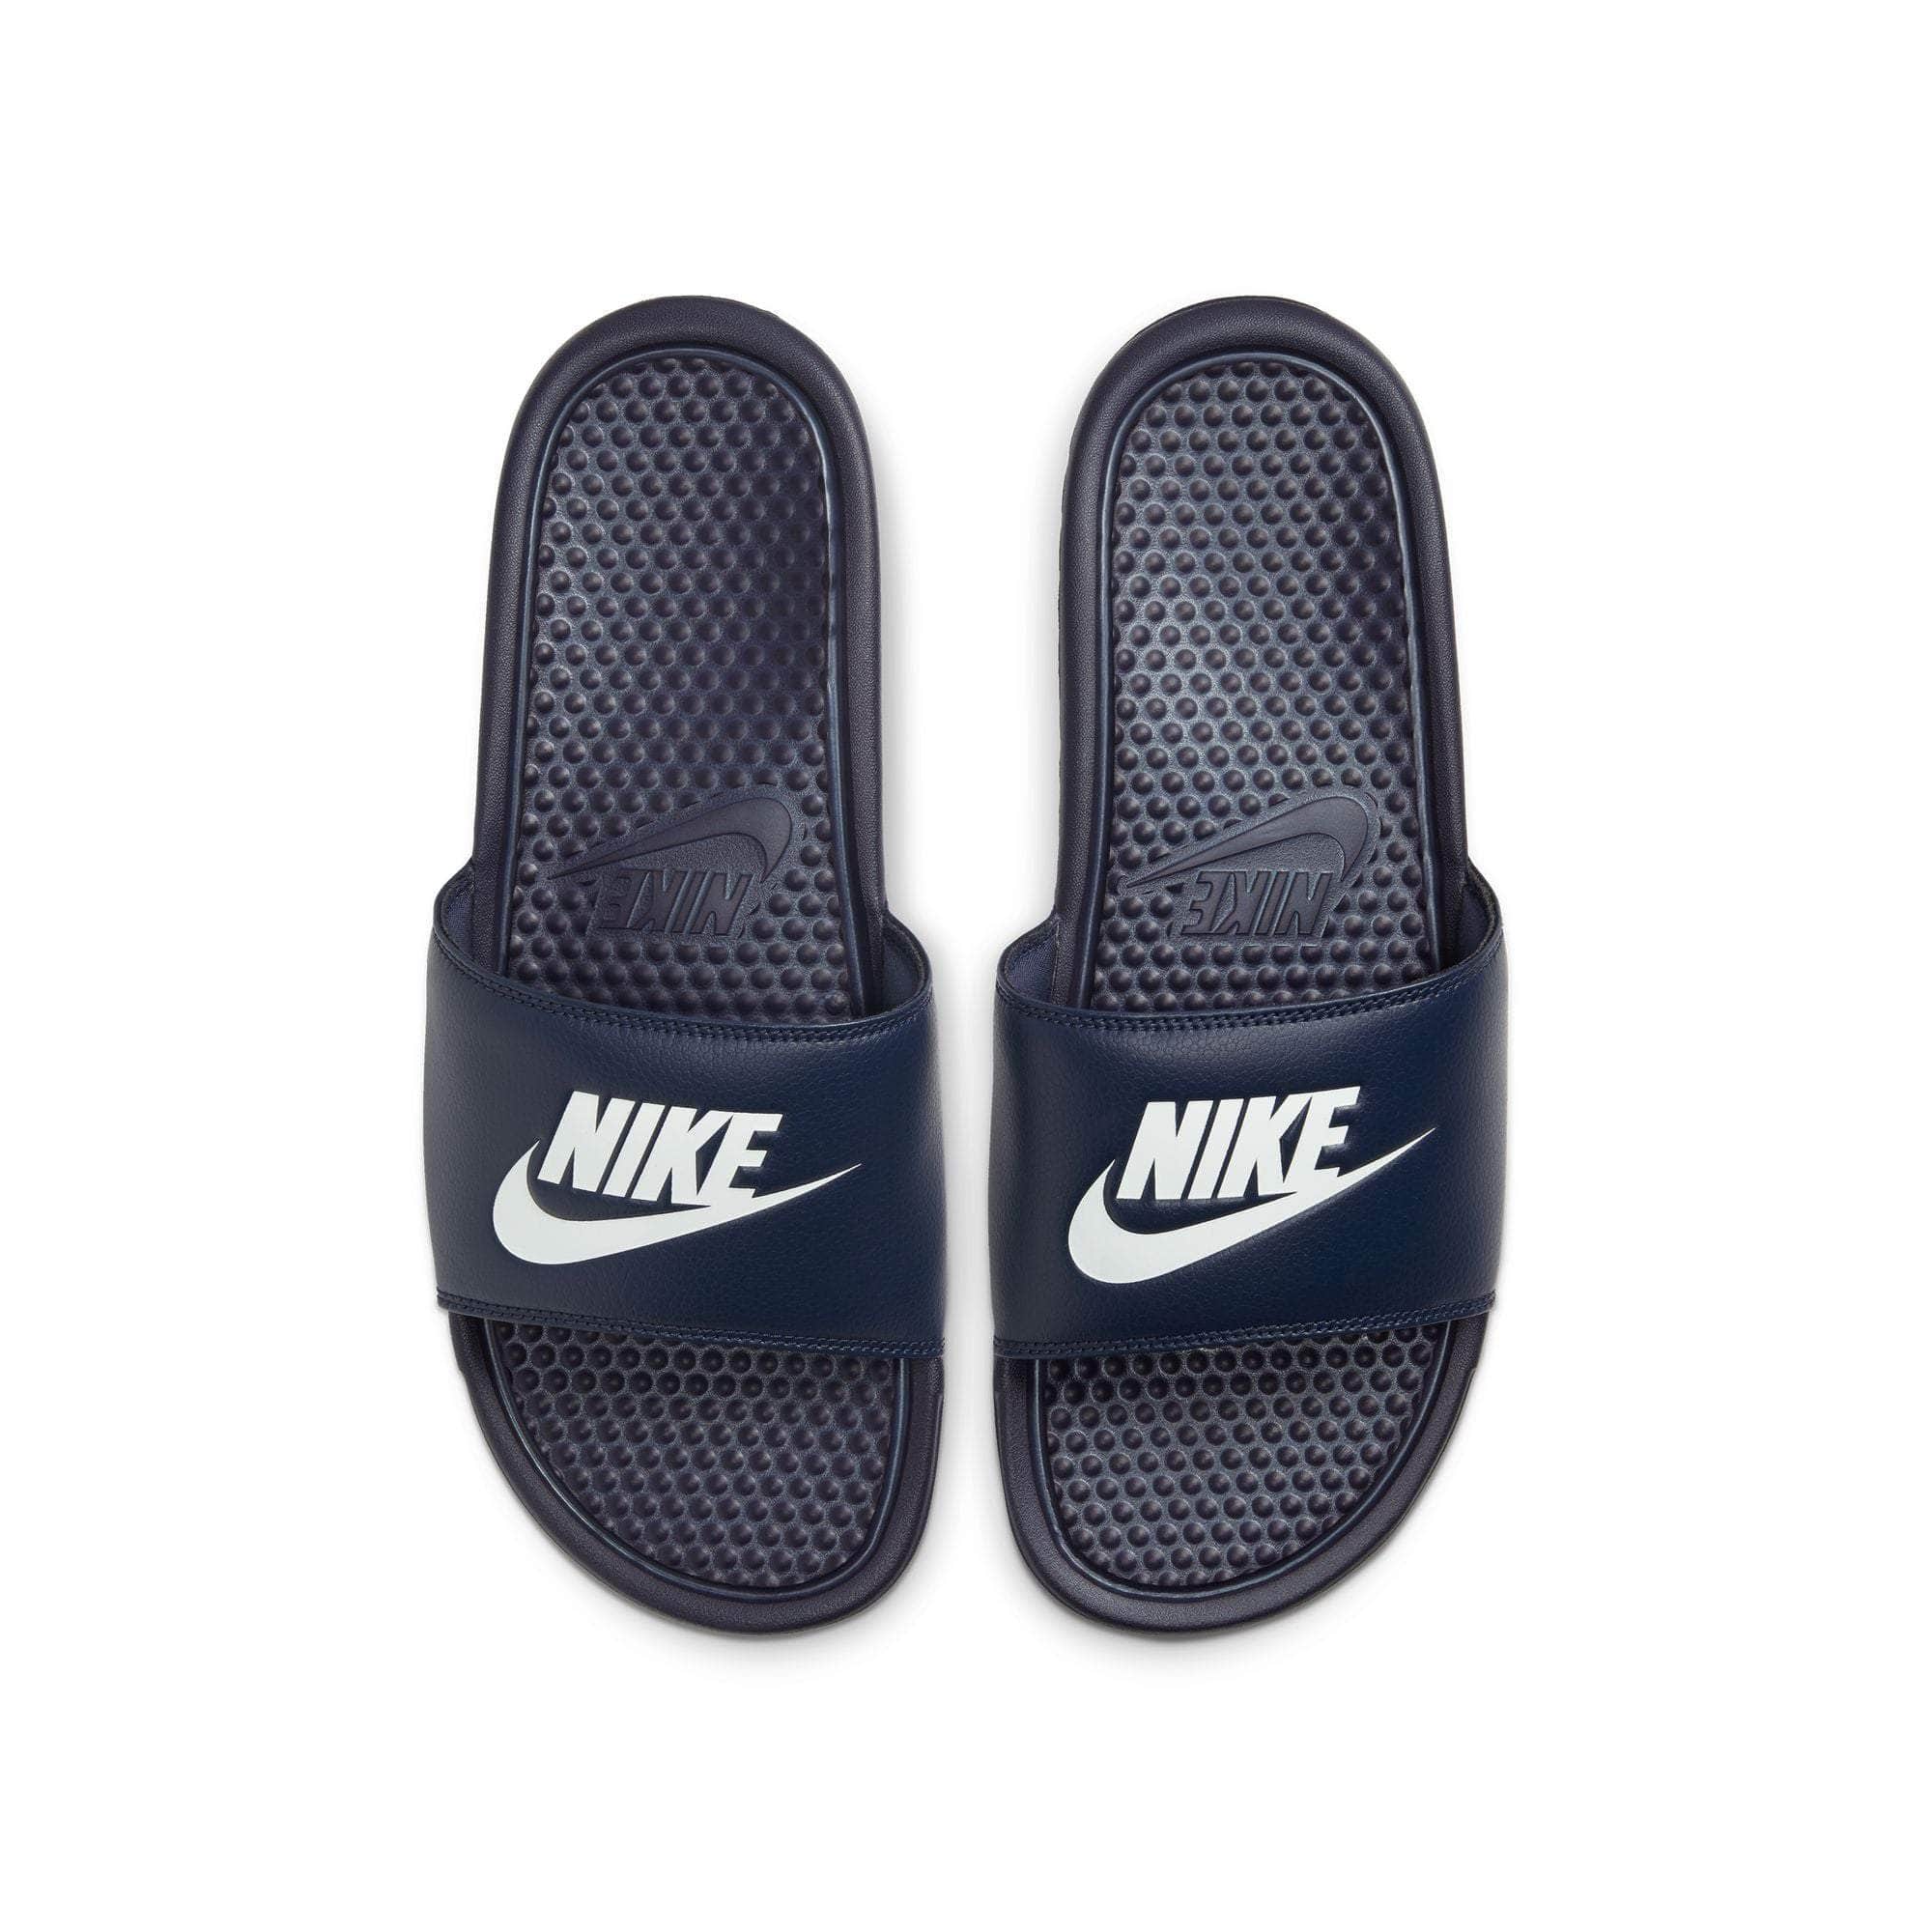 NIKE FOOTWEAR Nike Benassi Jdi - Men's